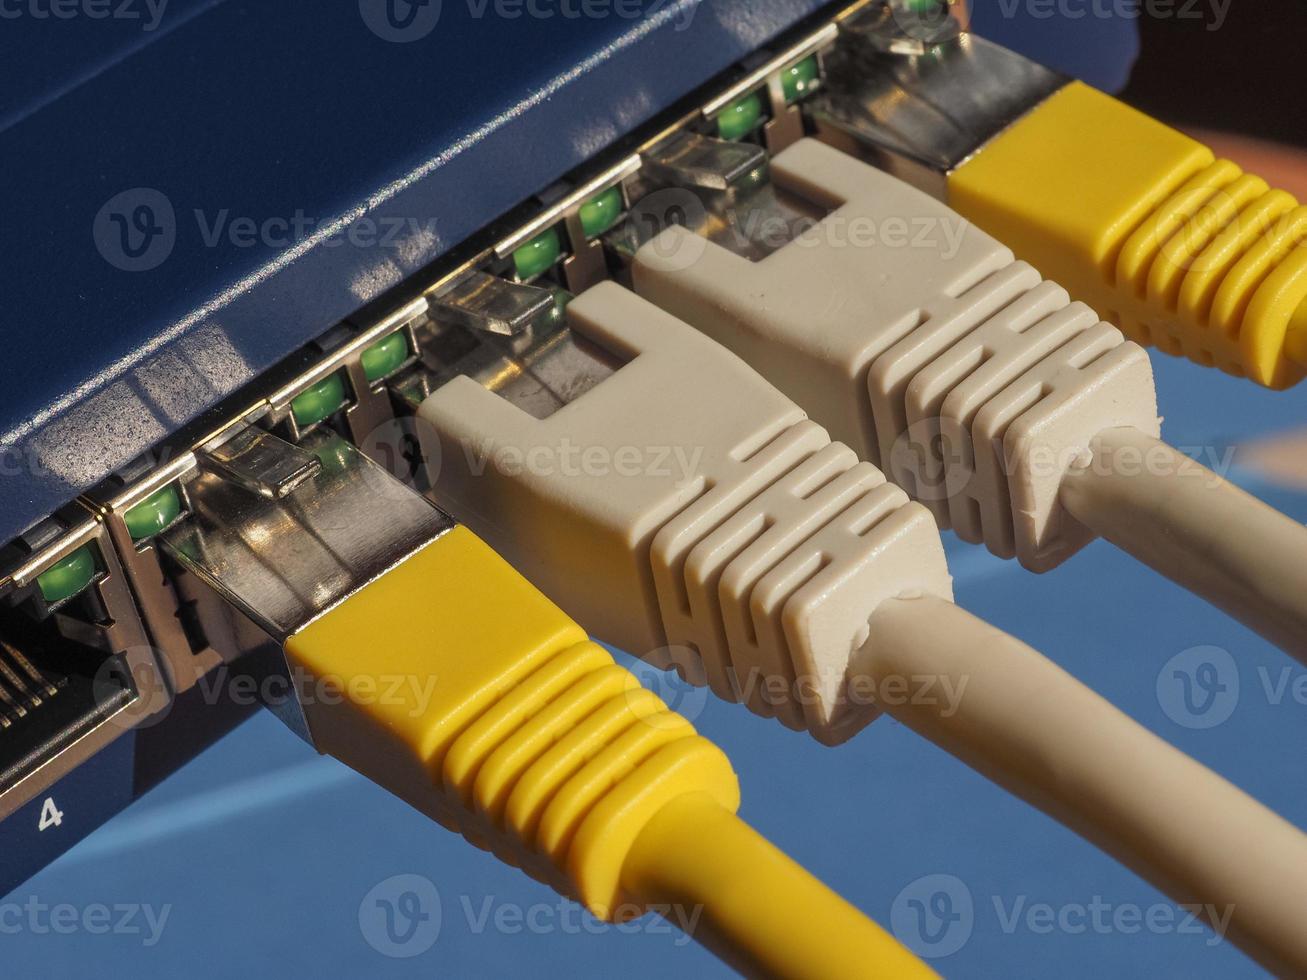 modem router switch met rj45 ethernet plug poorten foto